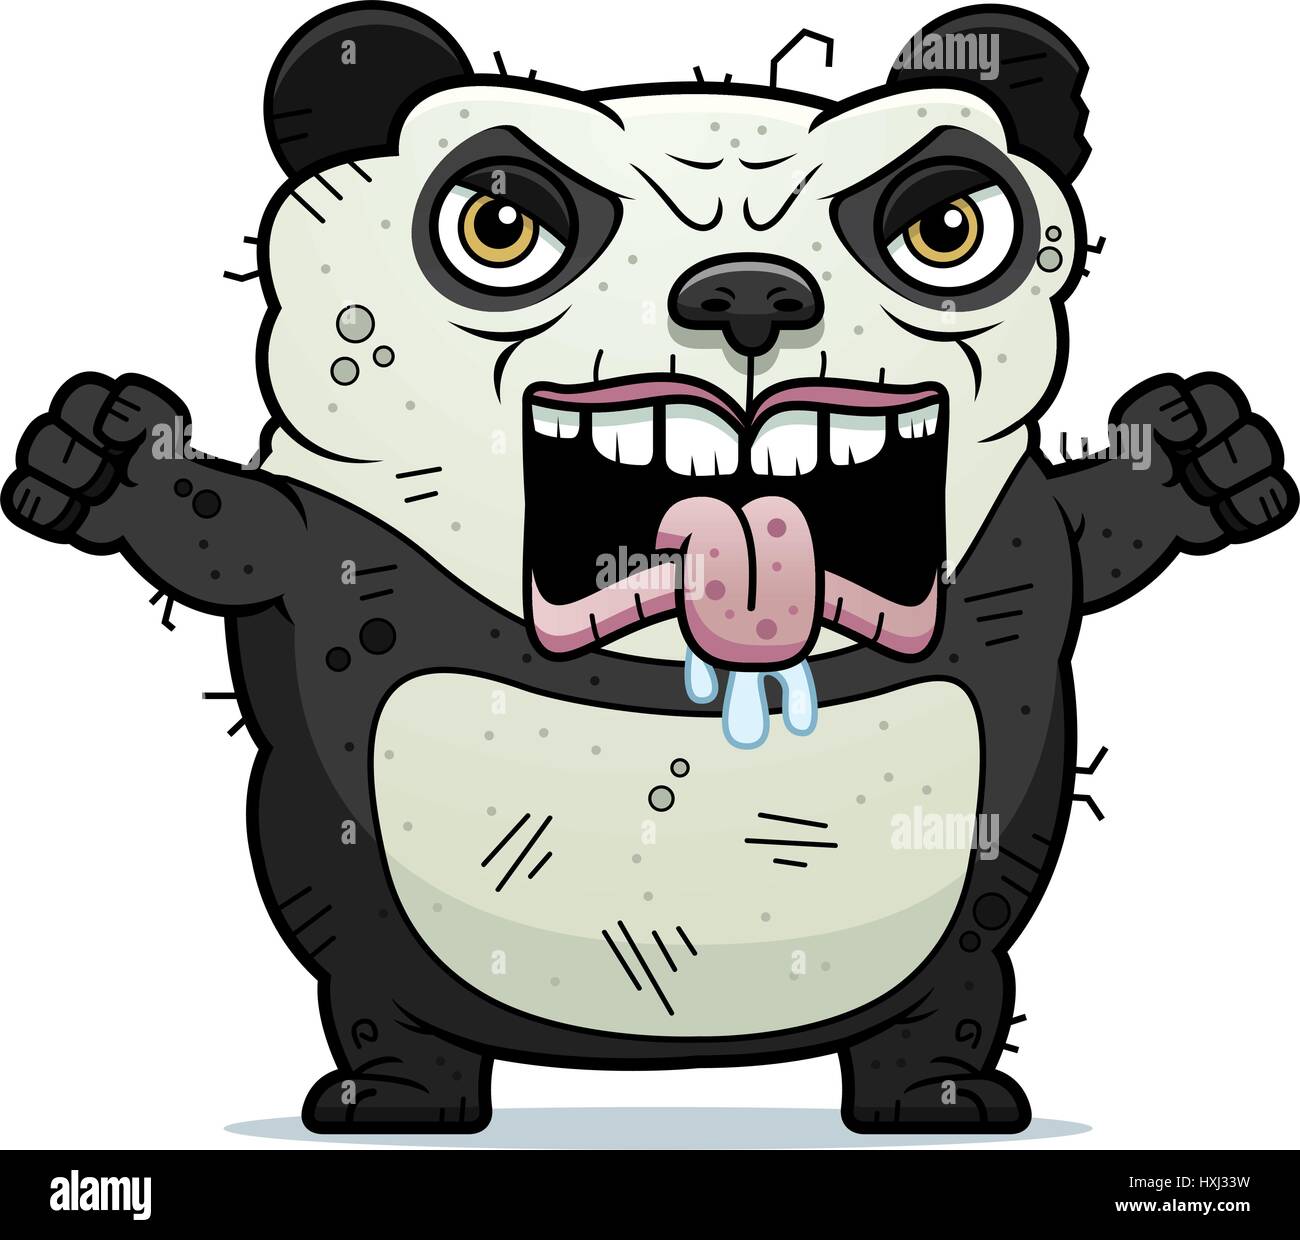 A cartoon illustration of an ugly panda bear looking angry. Stock Vector